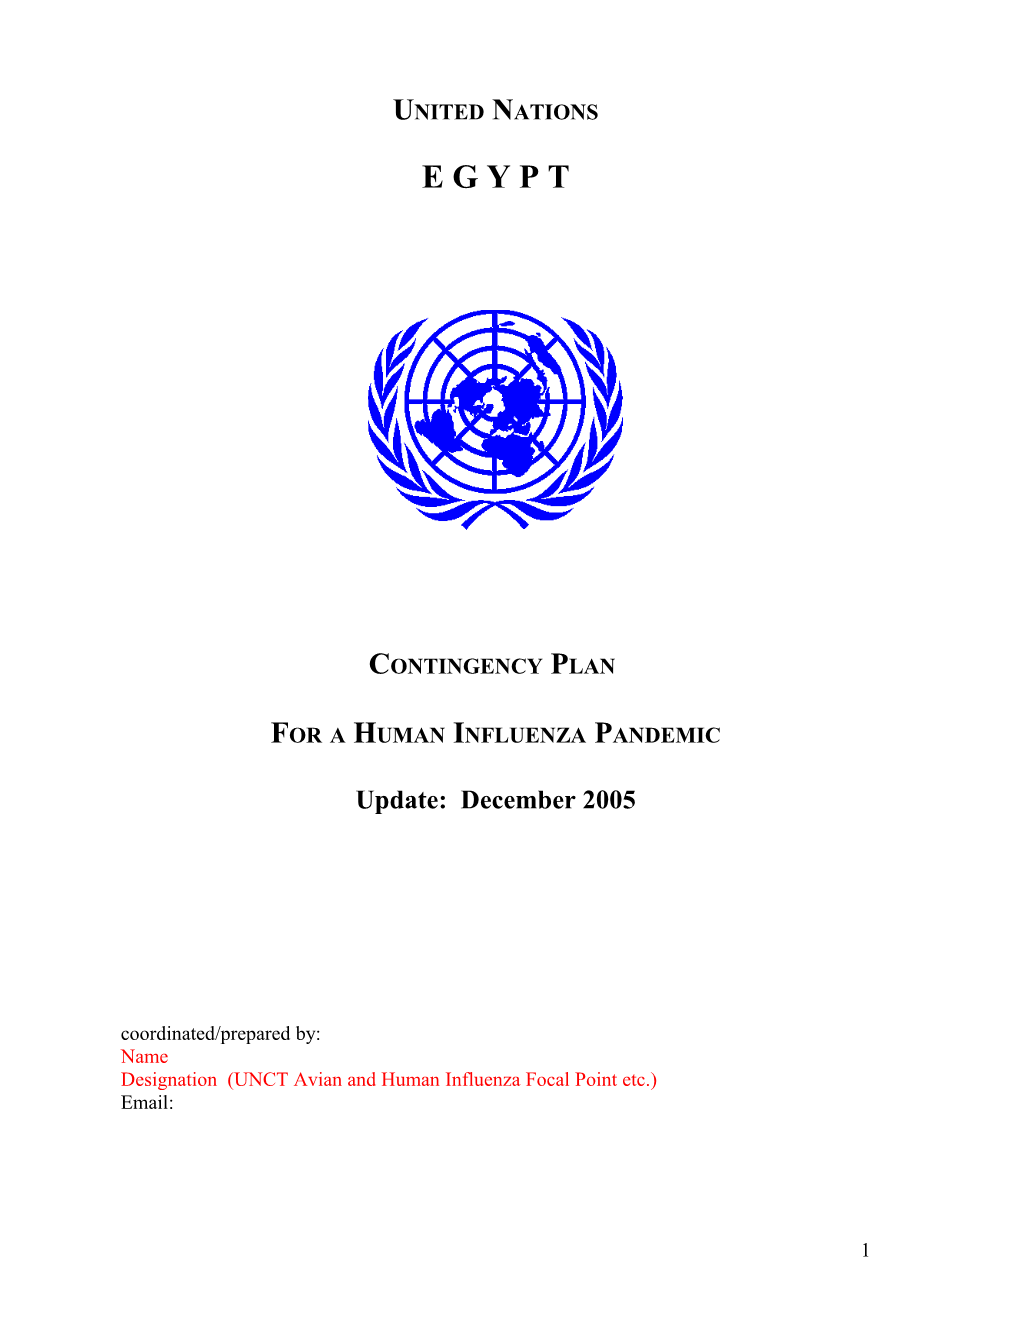 Egypt Contingency Plan